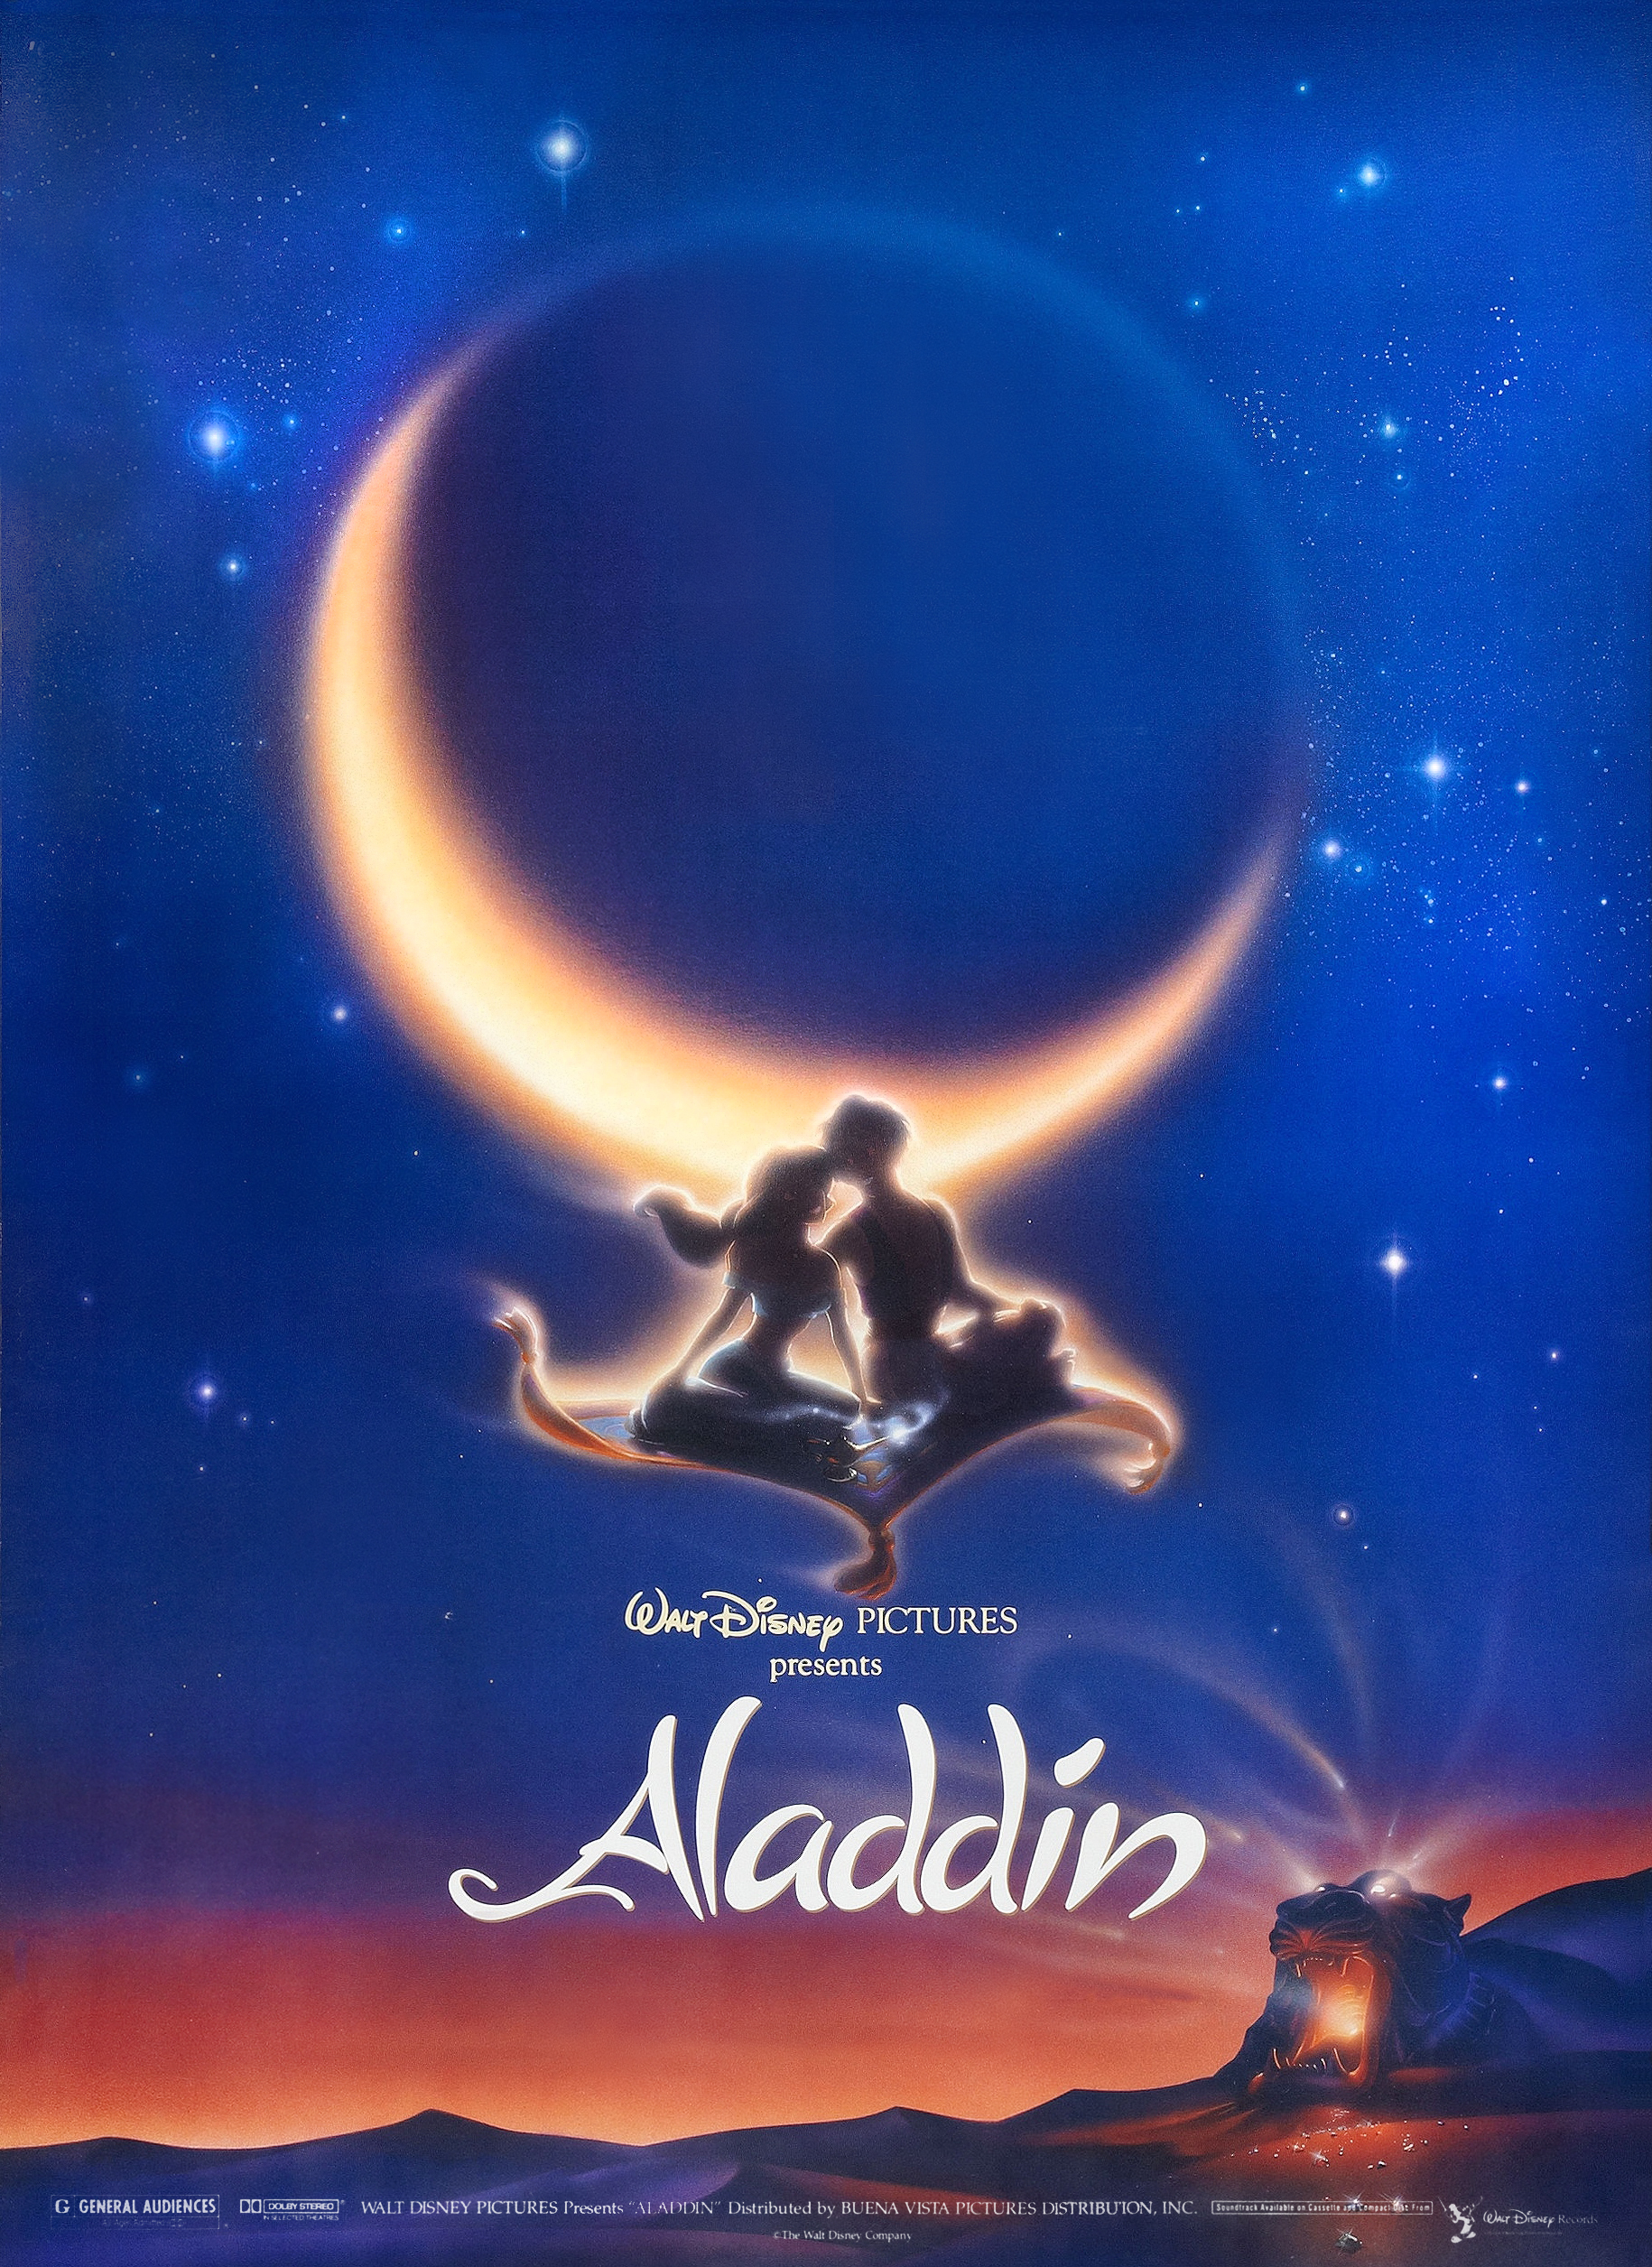 Aladdin download the new version